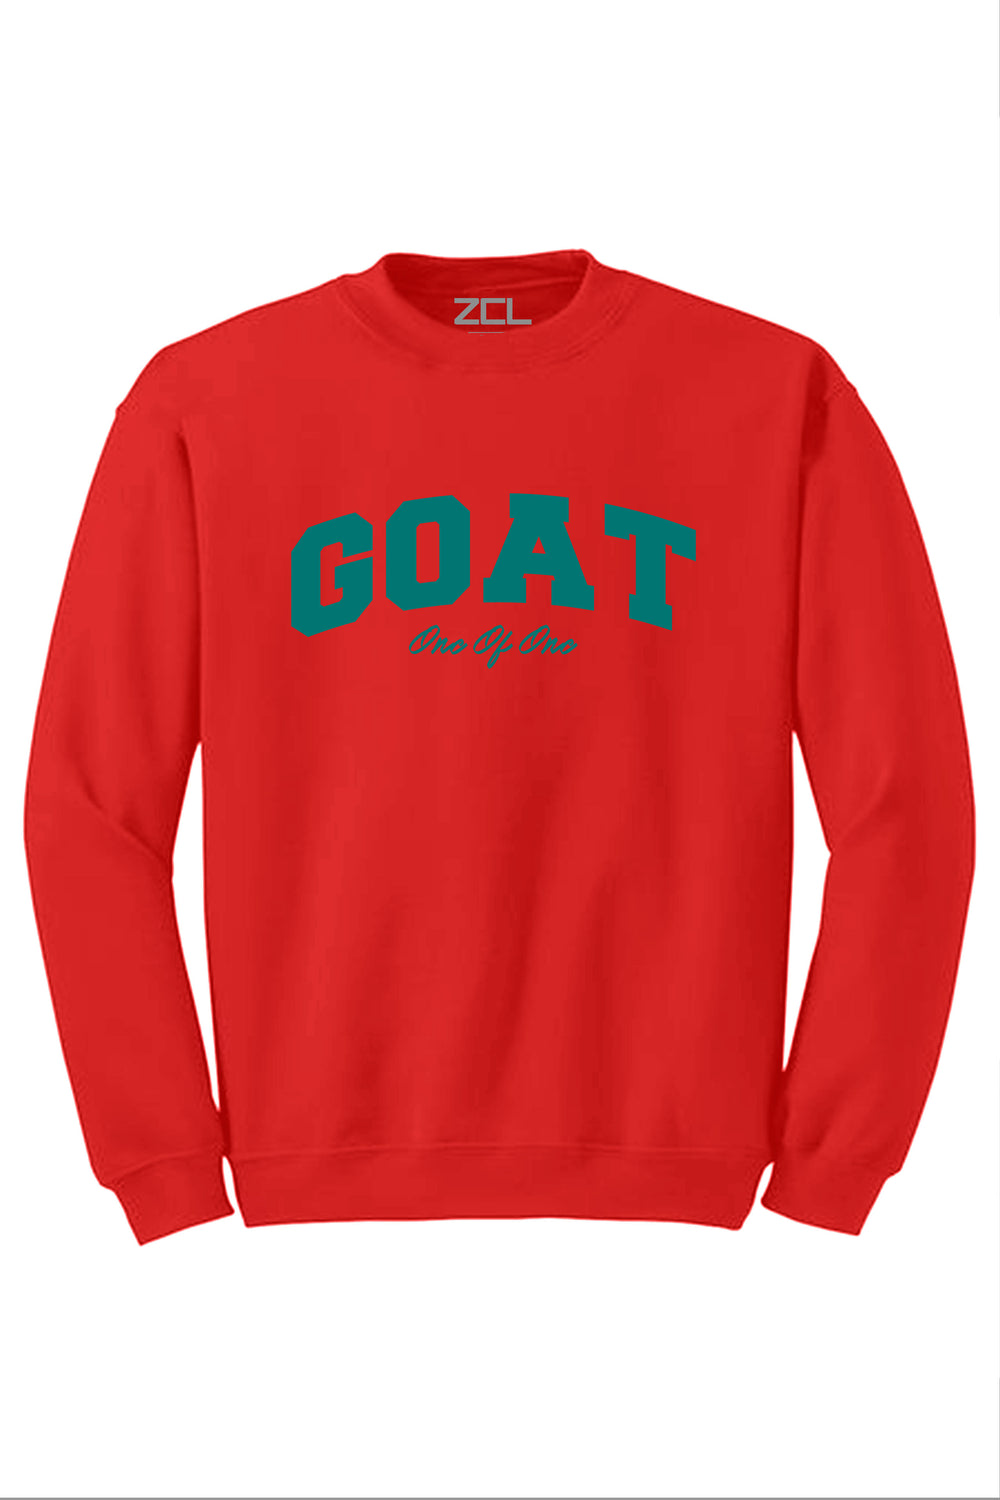 Goat Crewneck Sweatshirt (Teal Logo) - Zamage